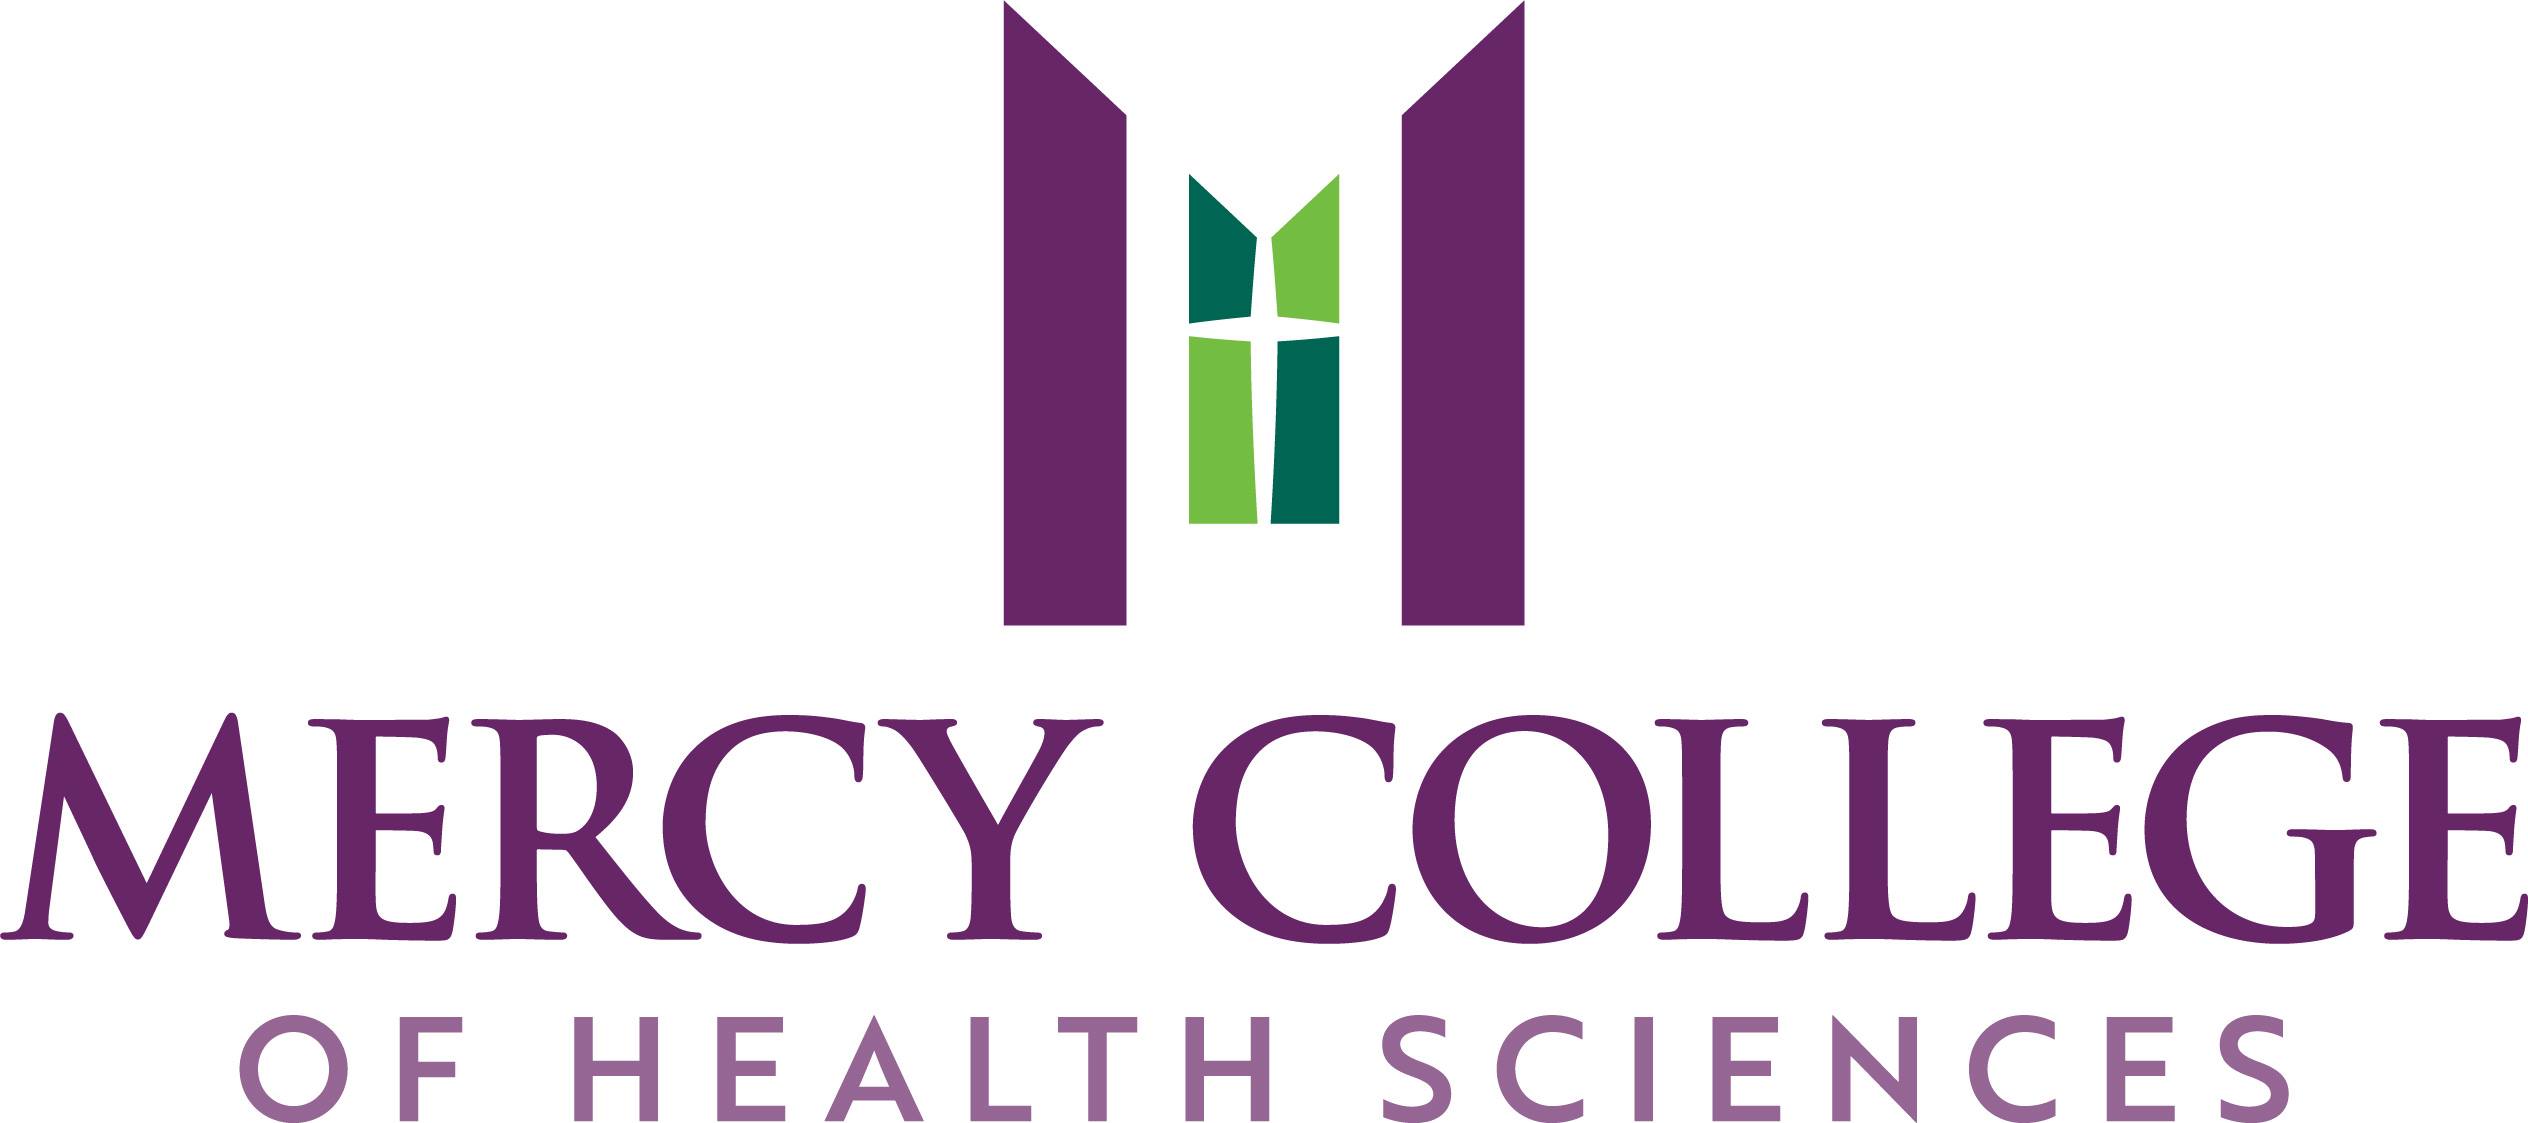 Mercy College of Health Sciences